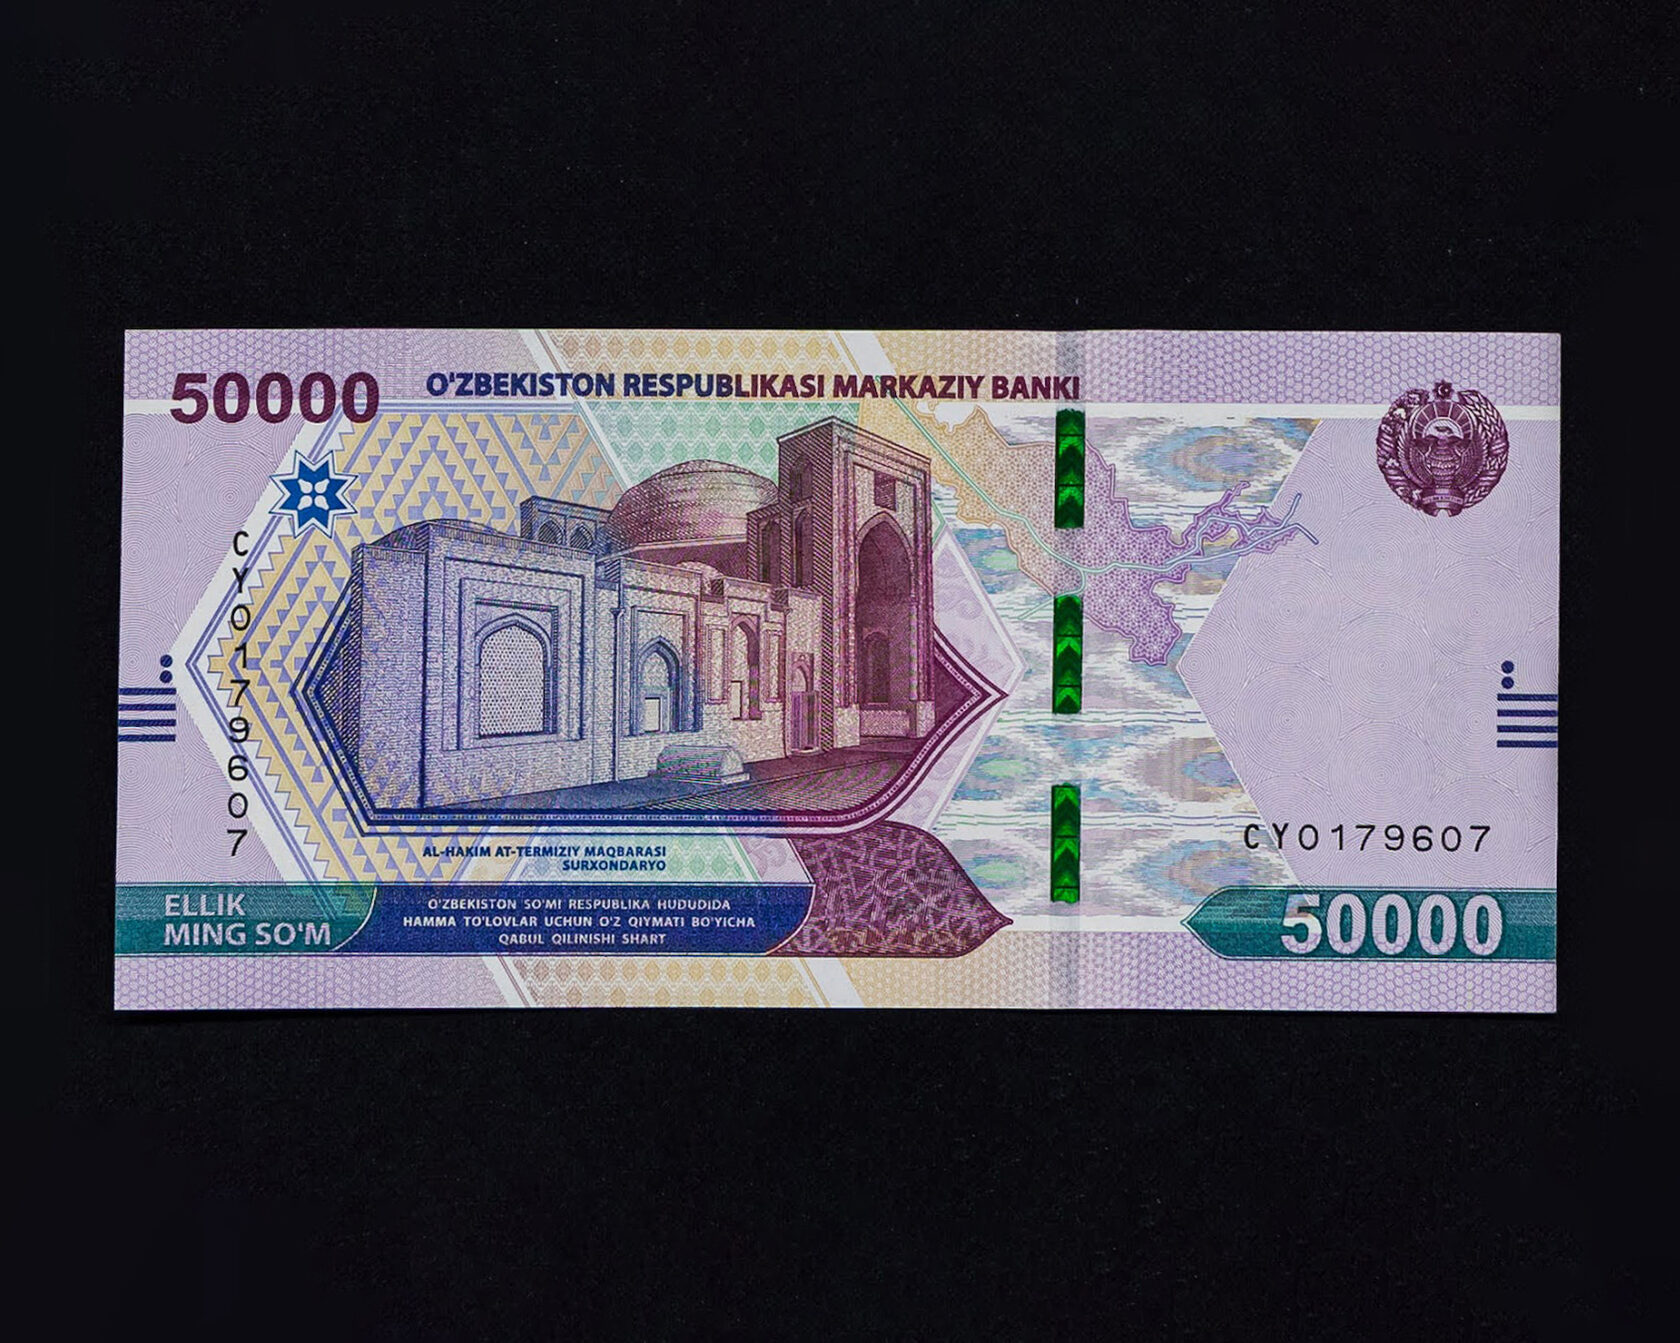 600000 сум в рублях. 2000 Узбекских сум. Узбекистан валюта 100$. Валюта Узбекистана сум. 50000 Сум купюра.